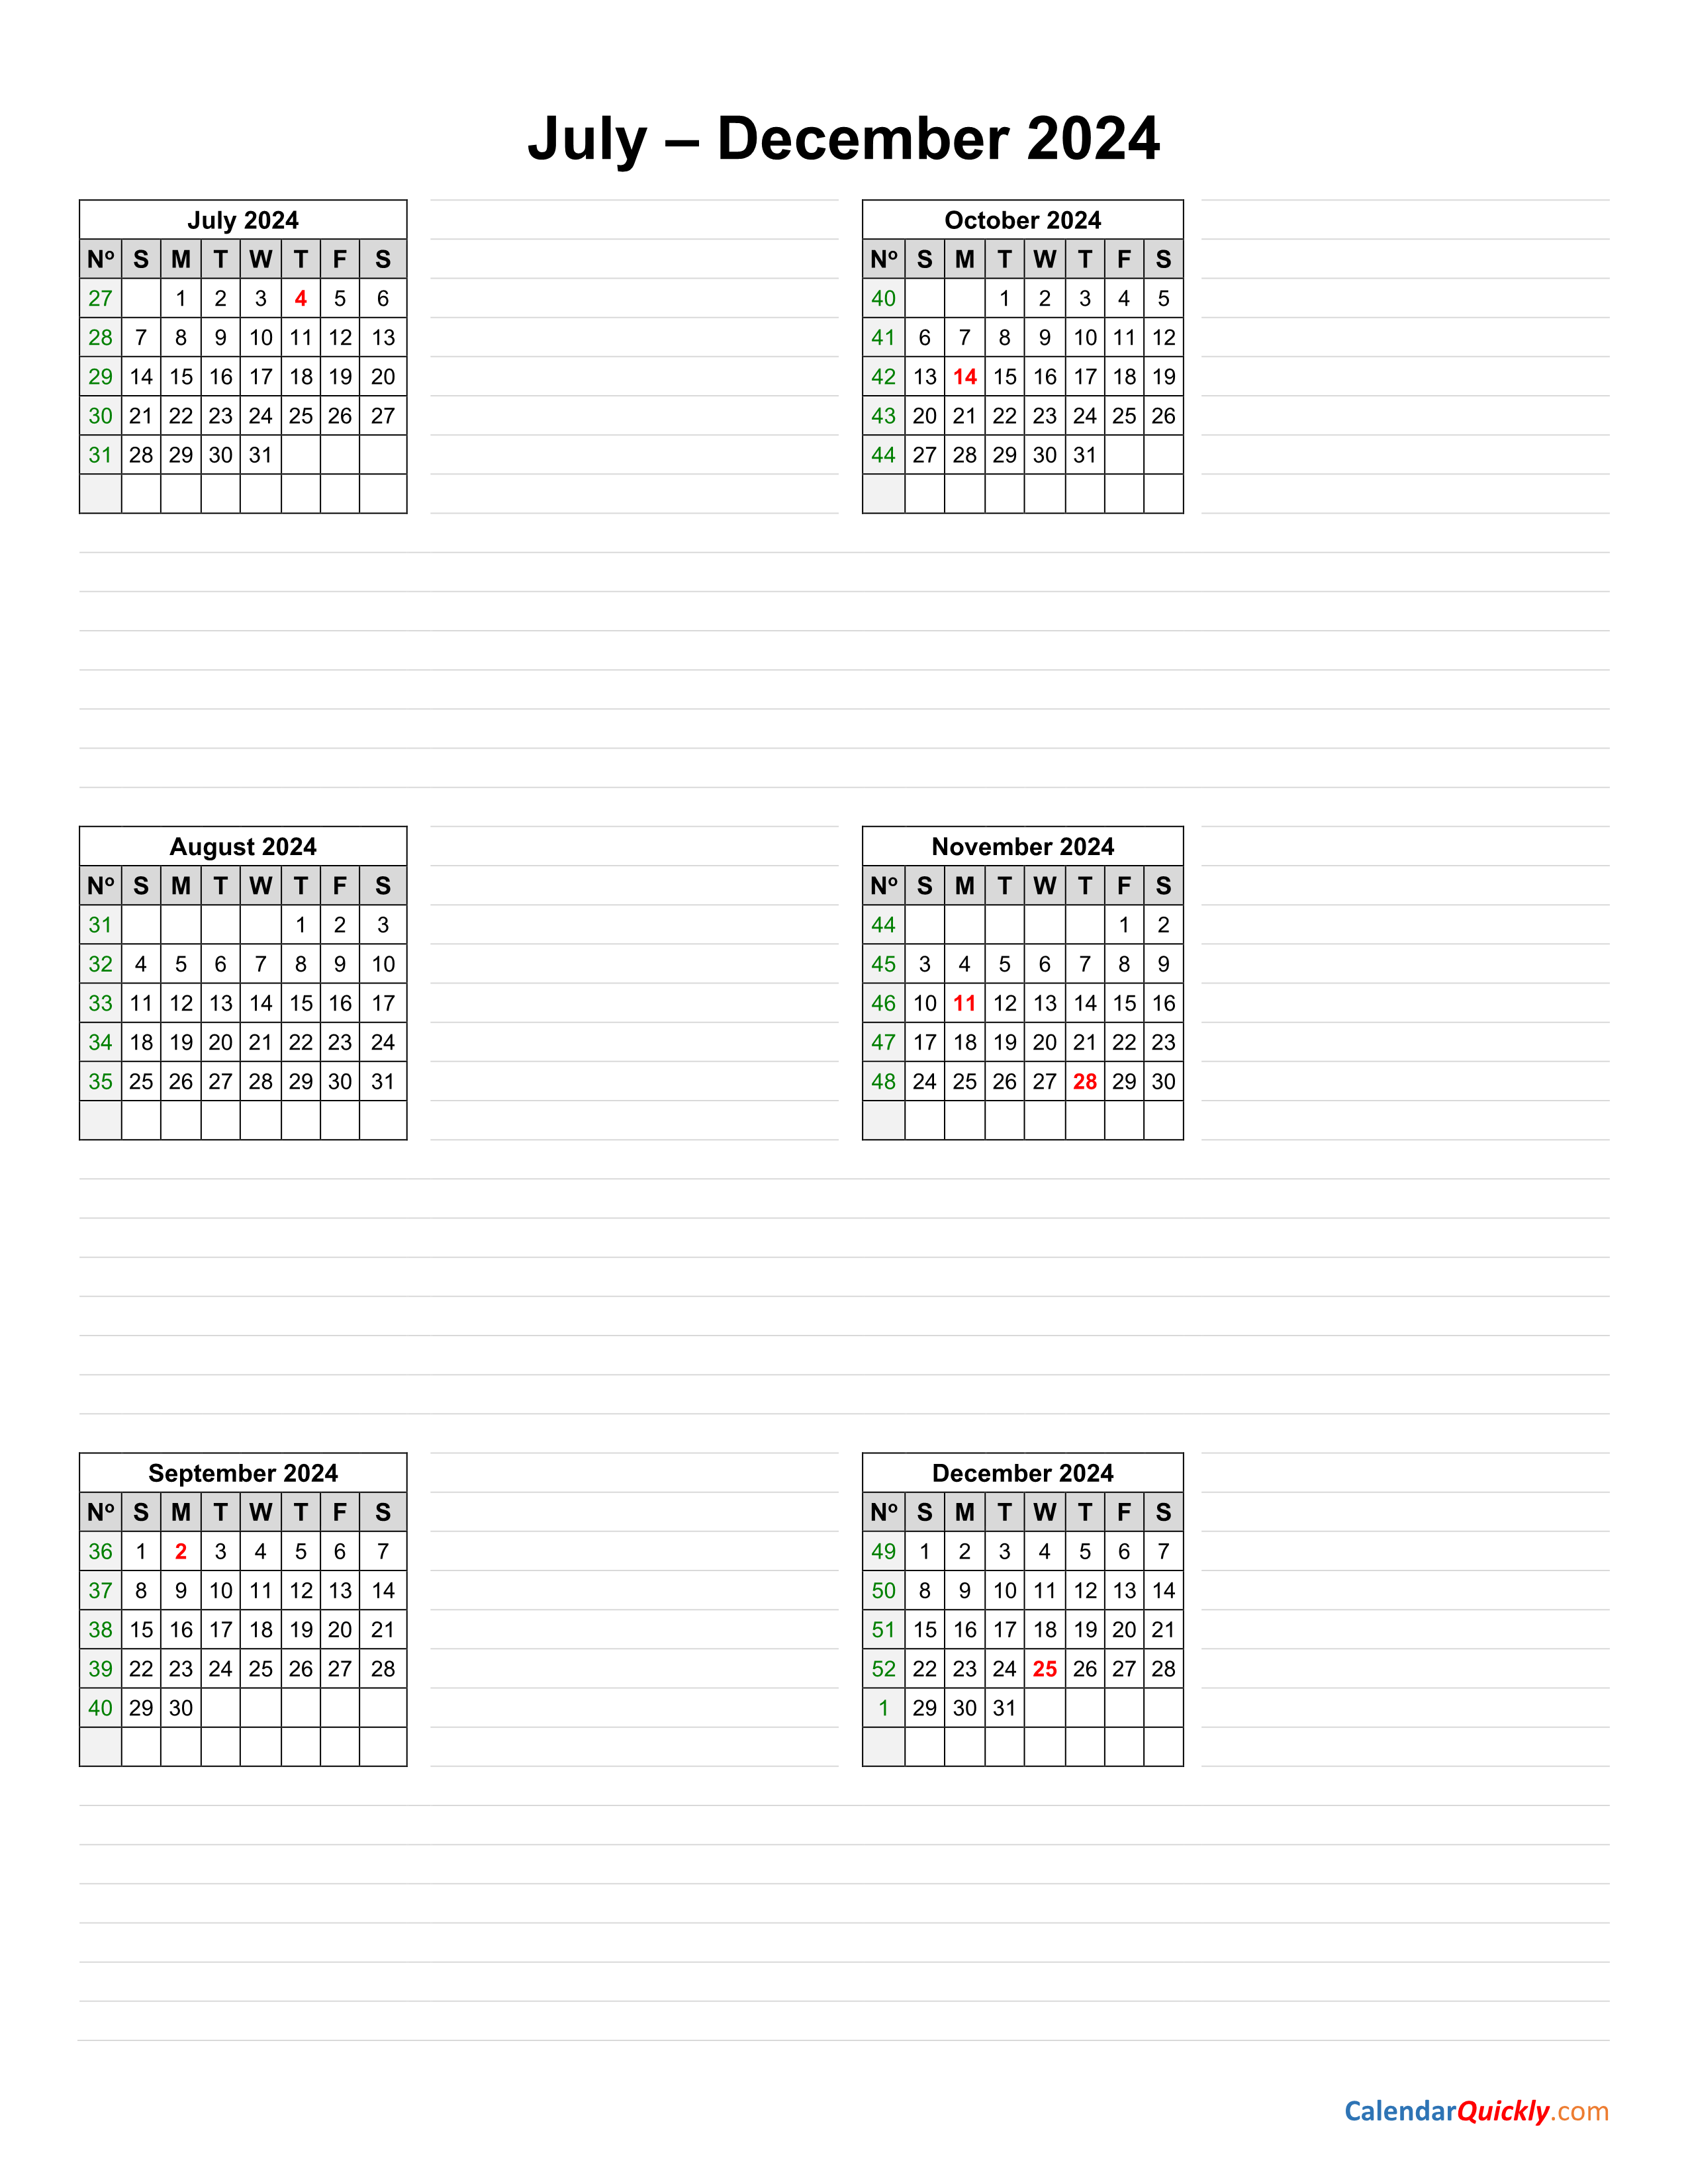 July to December 2024 Calendar Vertical Calendar Quickly